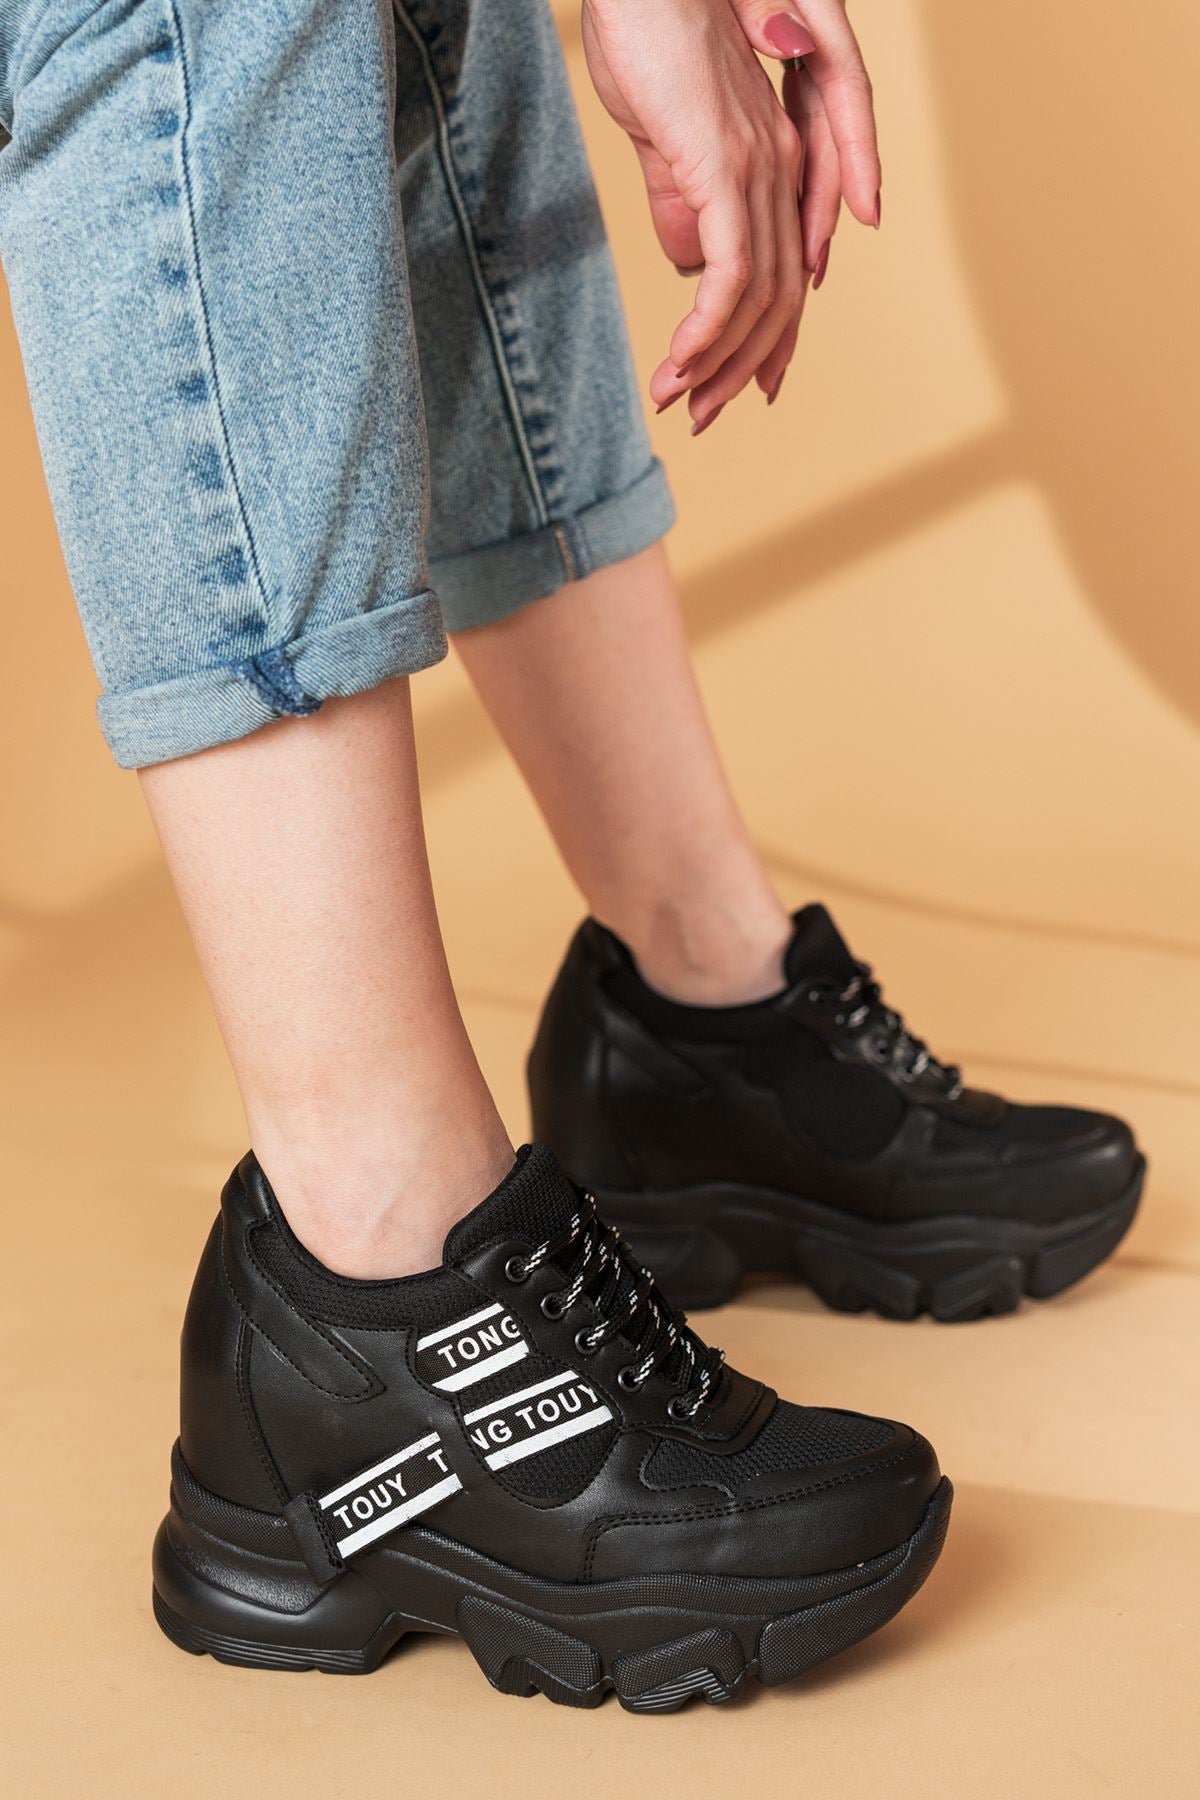 Reilo women's Black Matte Leather Sneakers shoes - STREETMODE ™